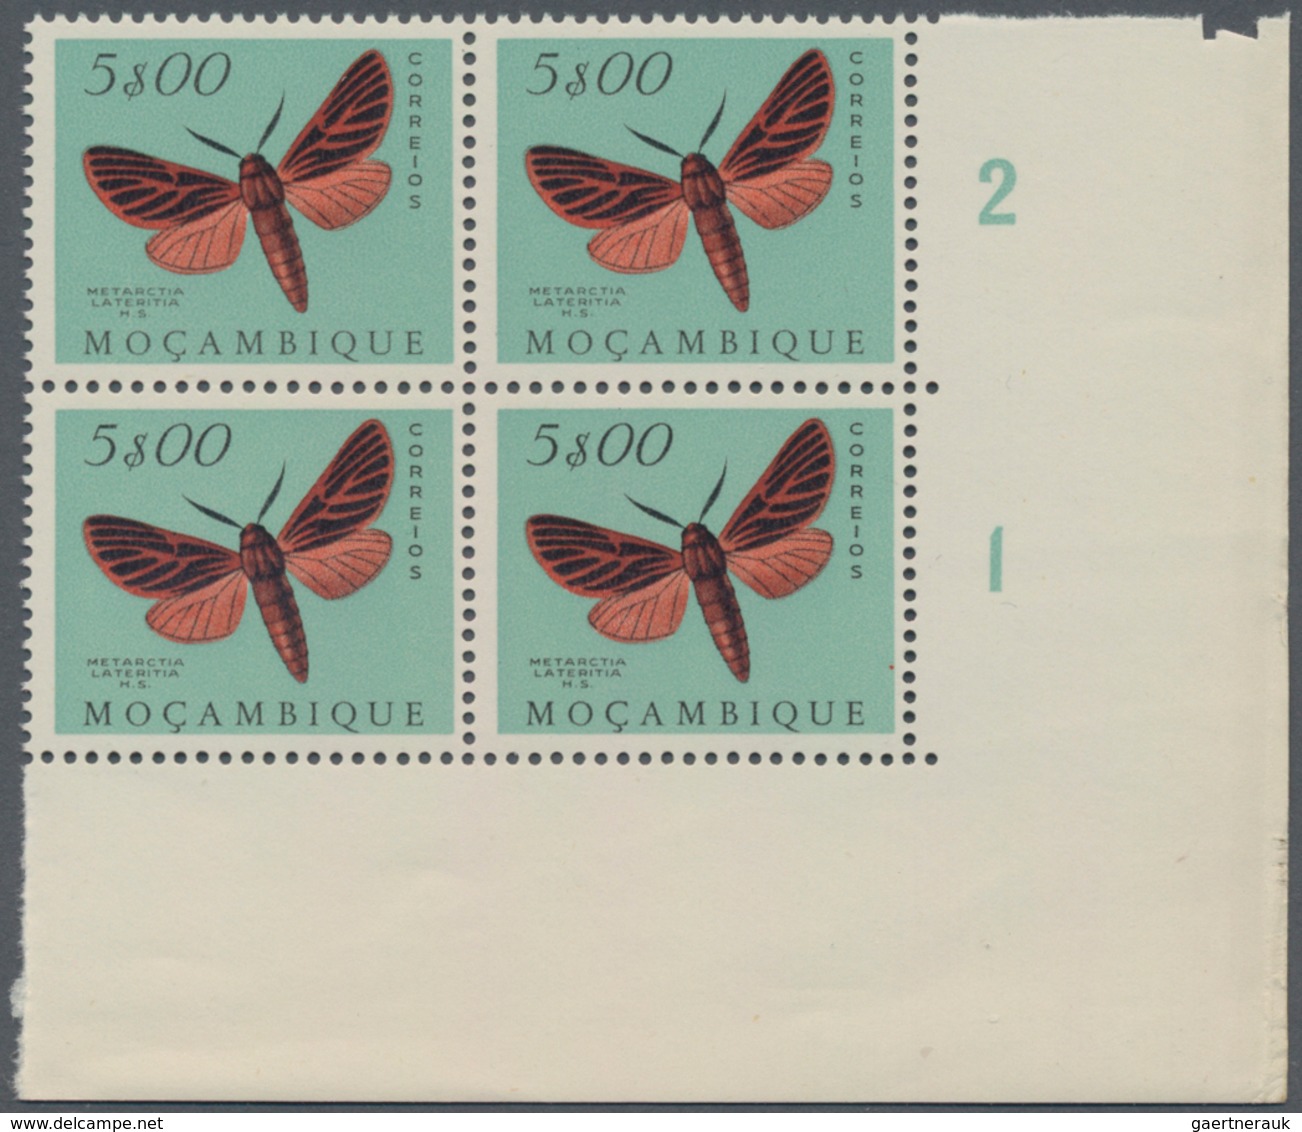 Thematik: Tiere-Schmetterlinge / animals-butterflies: 1953, butterflies, 20 values in corner blocks